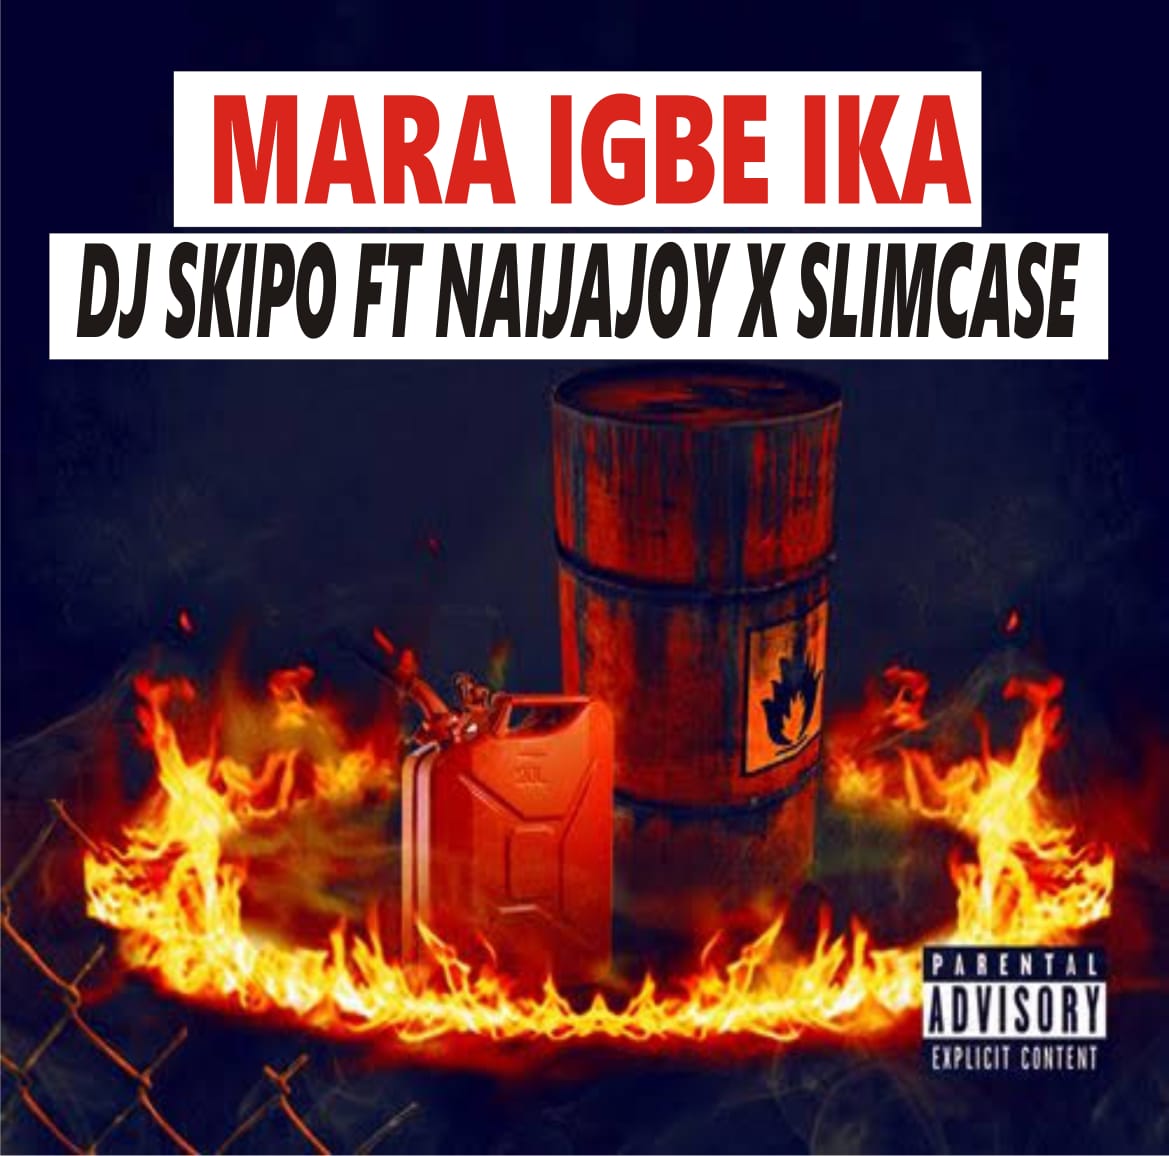 DJ Skipo ft. 9jajoy Slimcase — Mara Igbe Ika